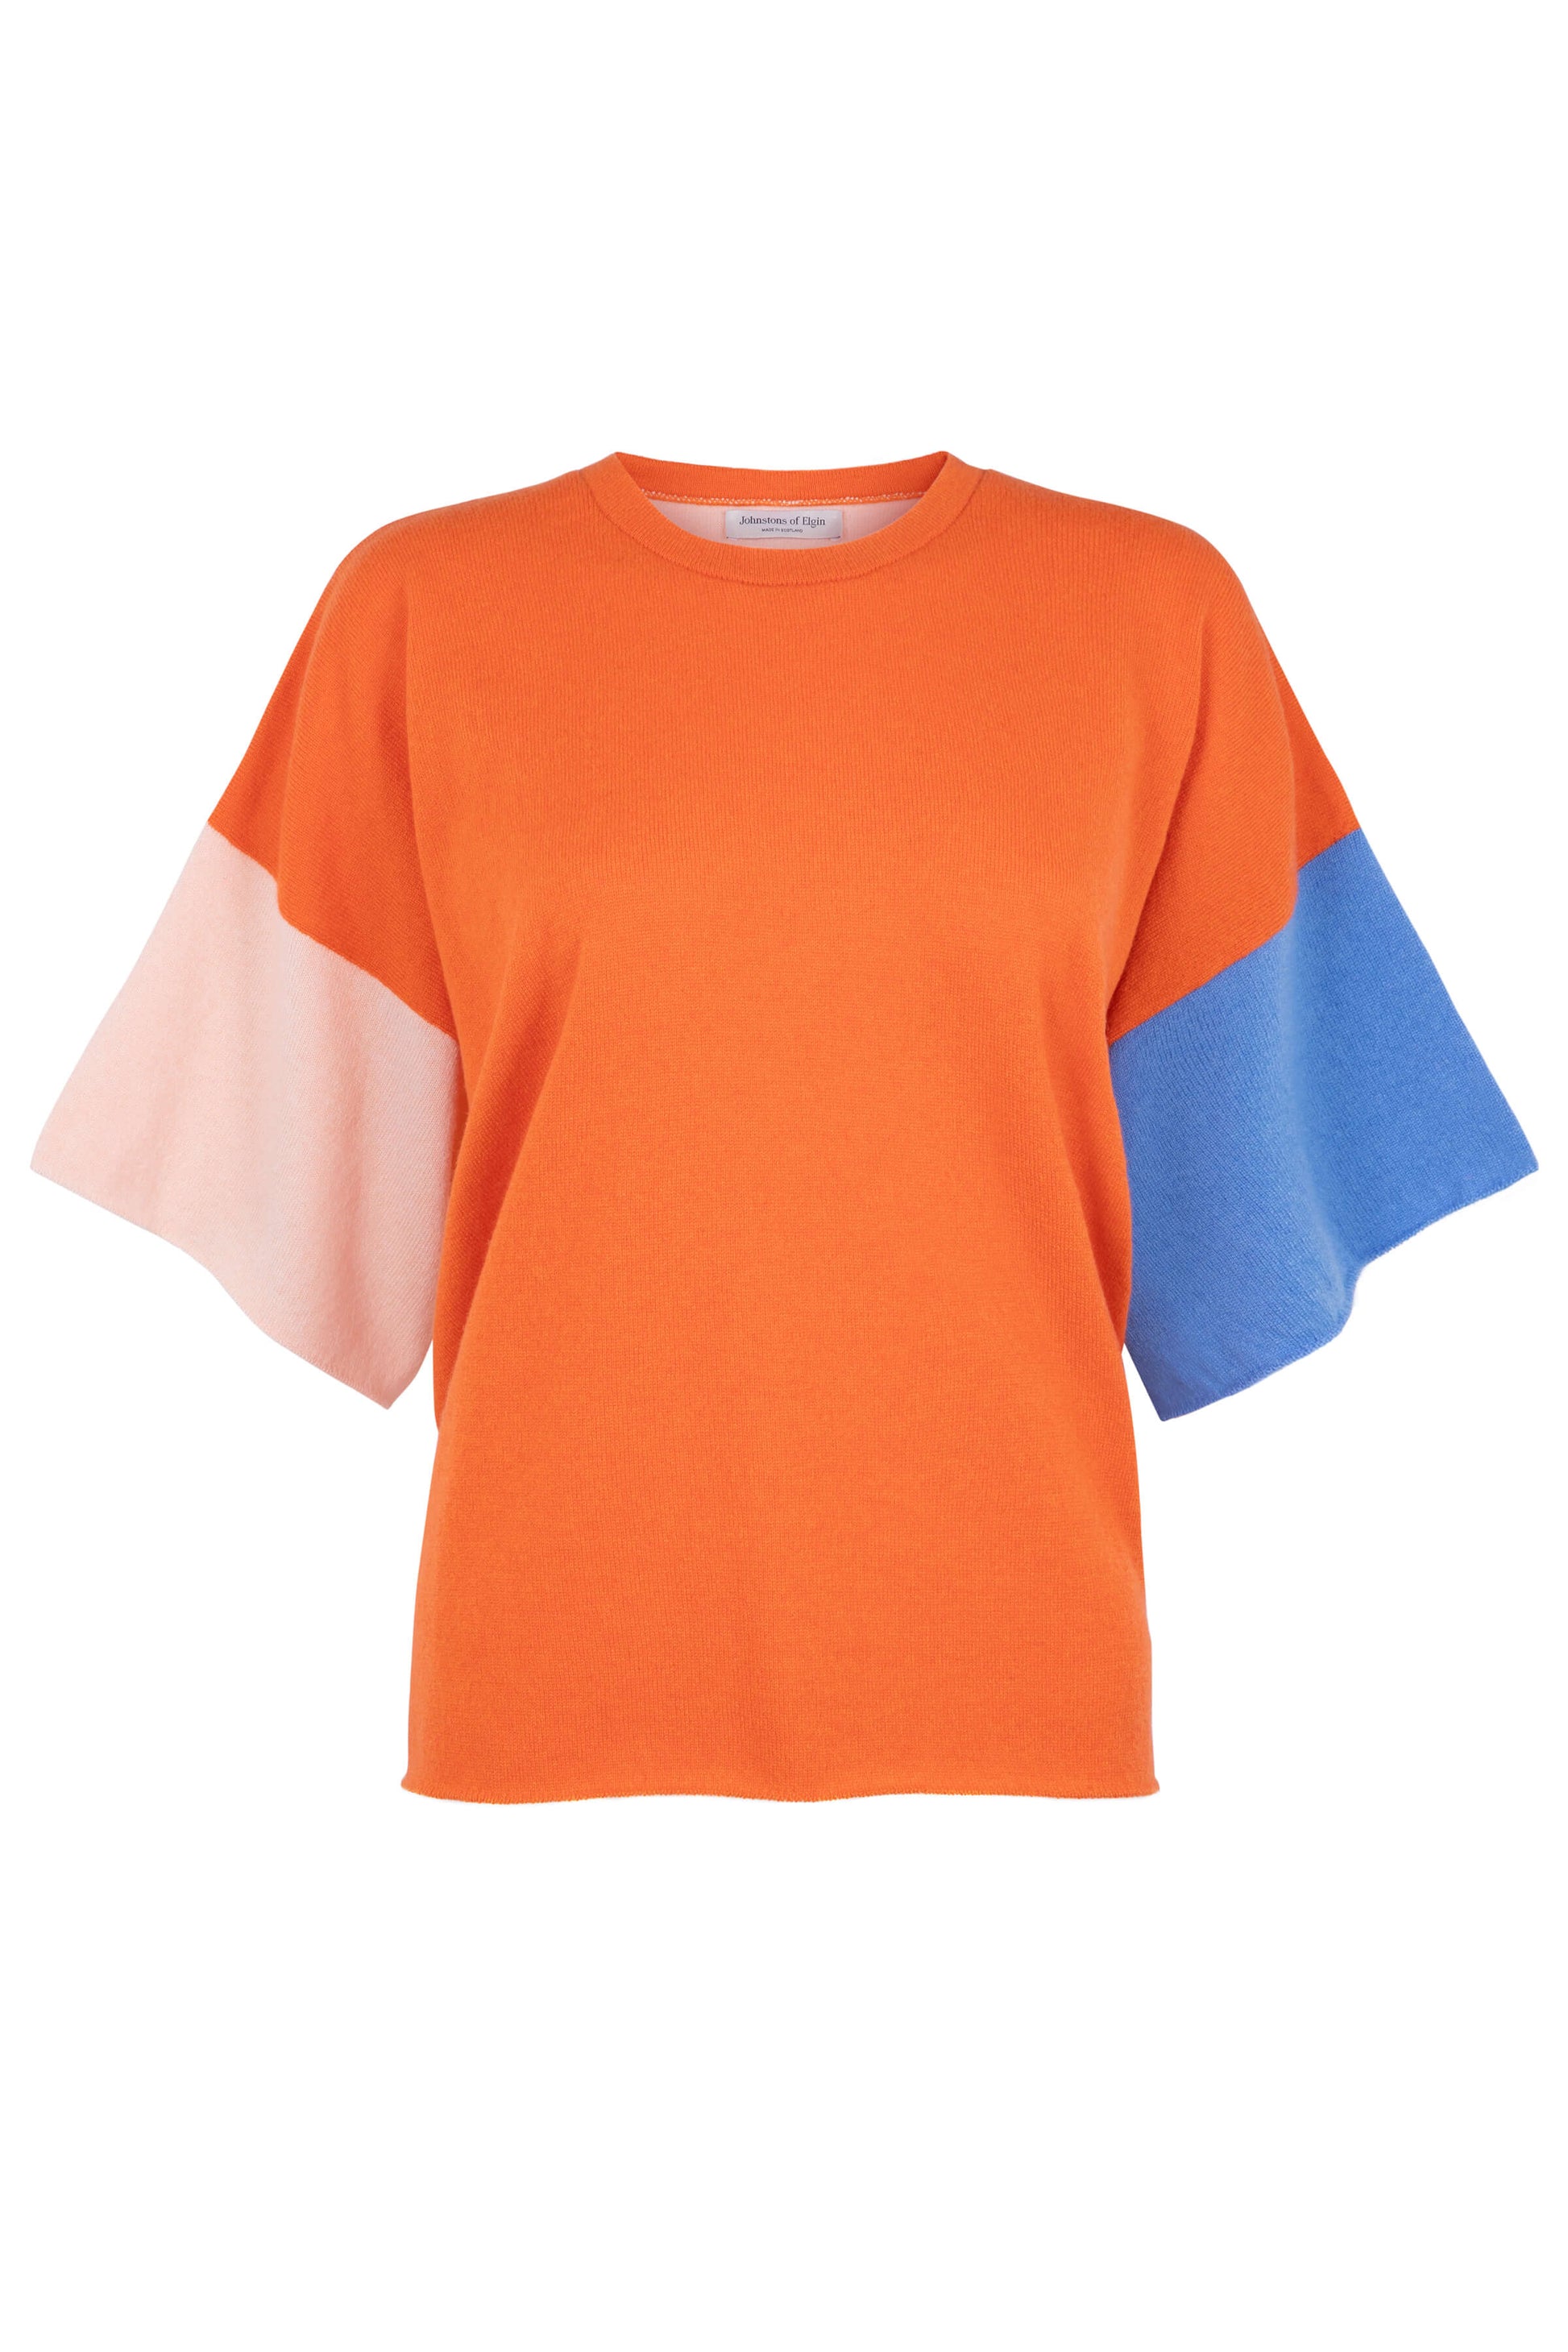 Johnstons of Elgin SS24 Women's Knitwear Firethorn Orange, Skye Blue & Oyster Colour Block Cashmere T-Shirt KAP05200Q24279